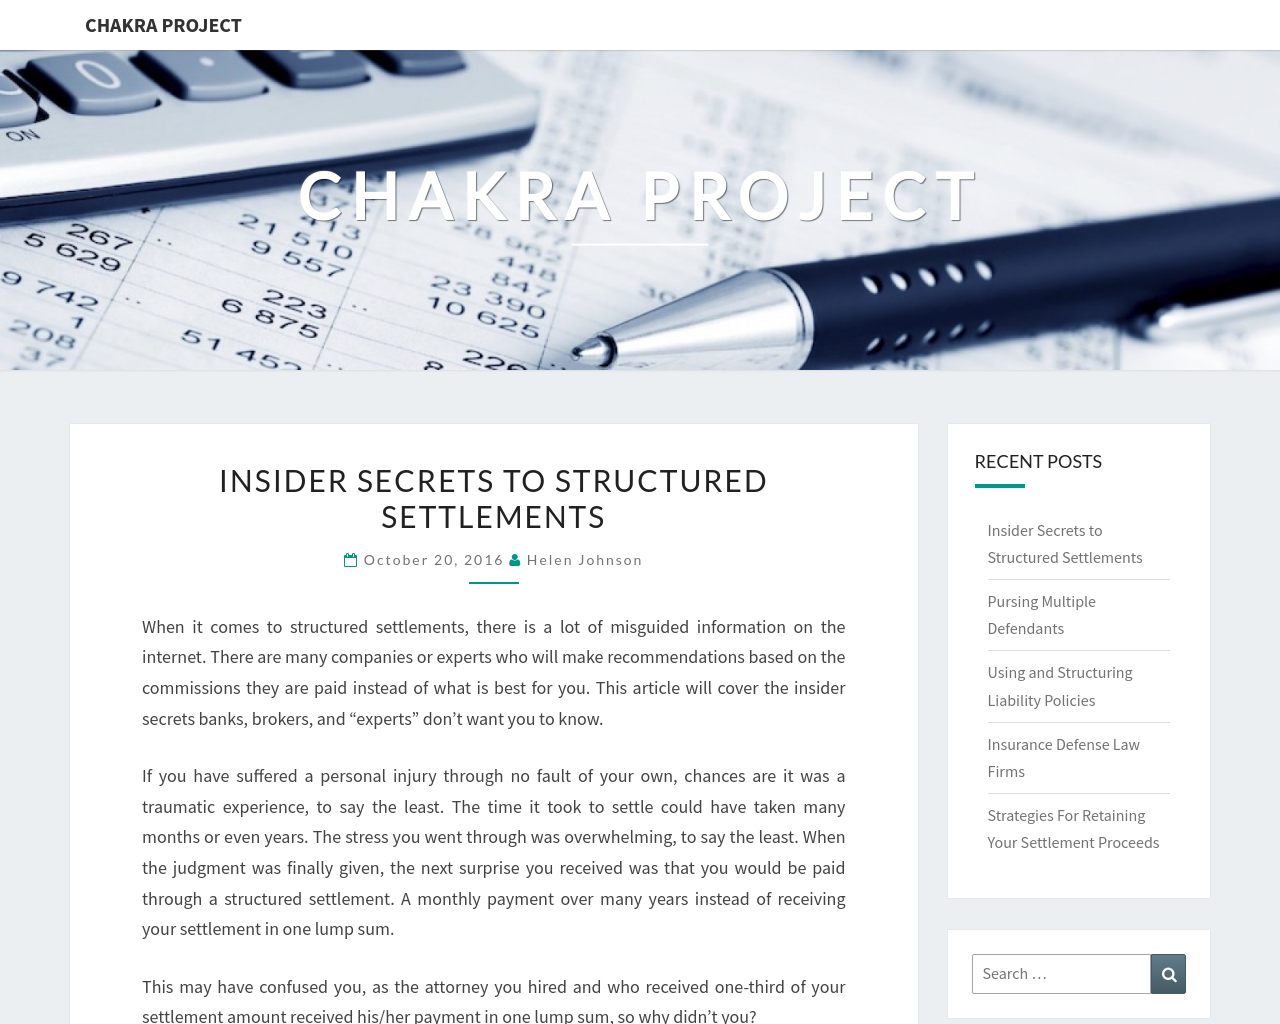 chakra-project.org